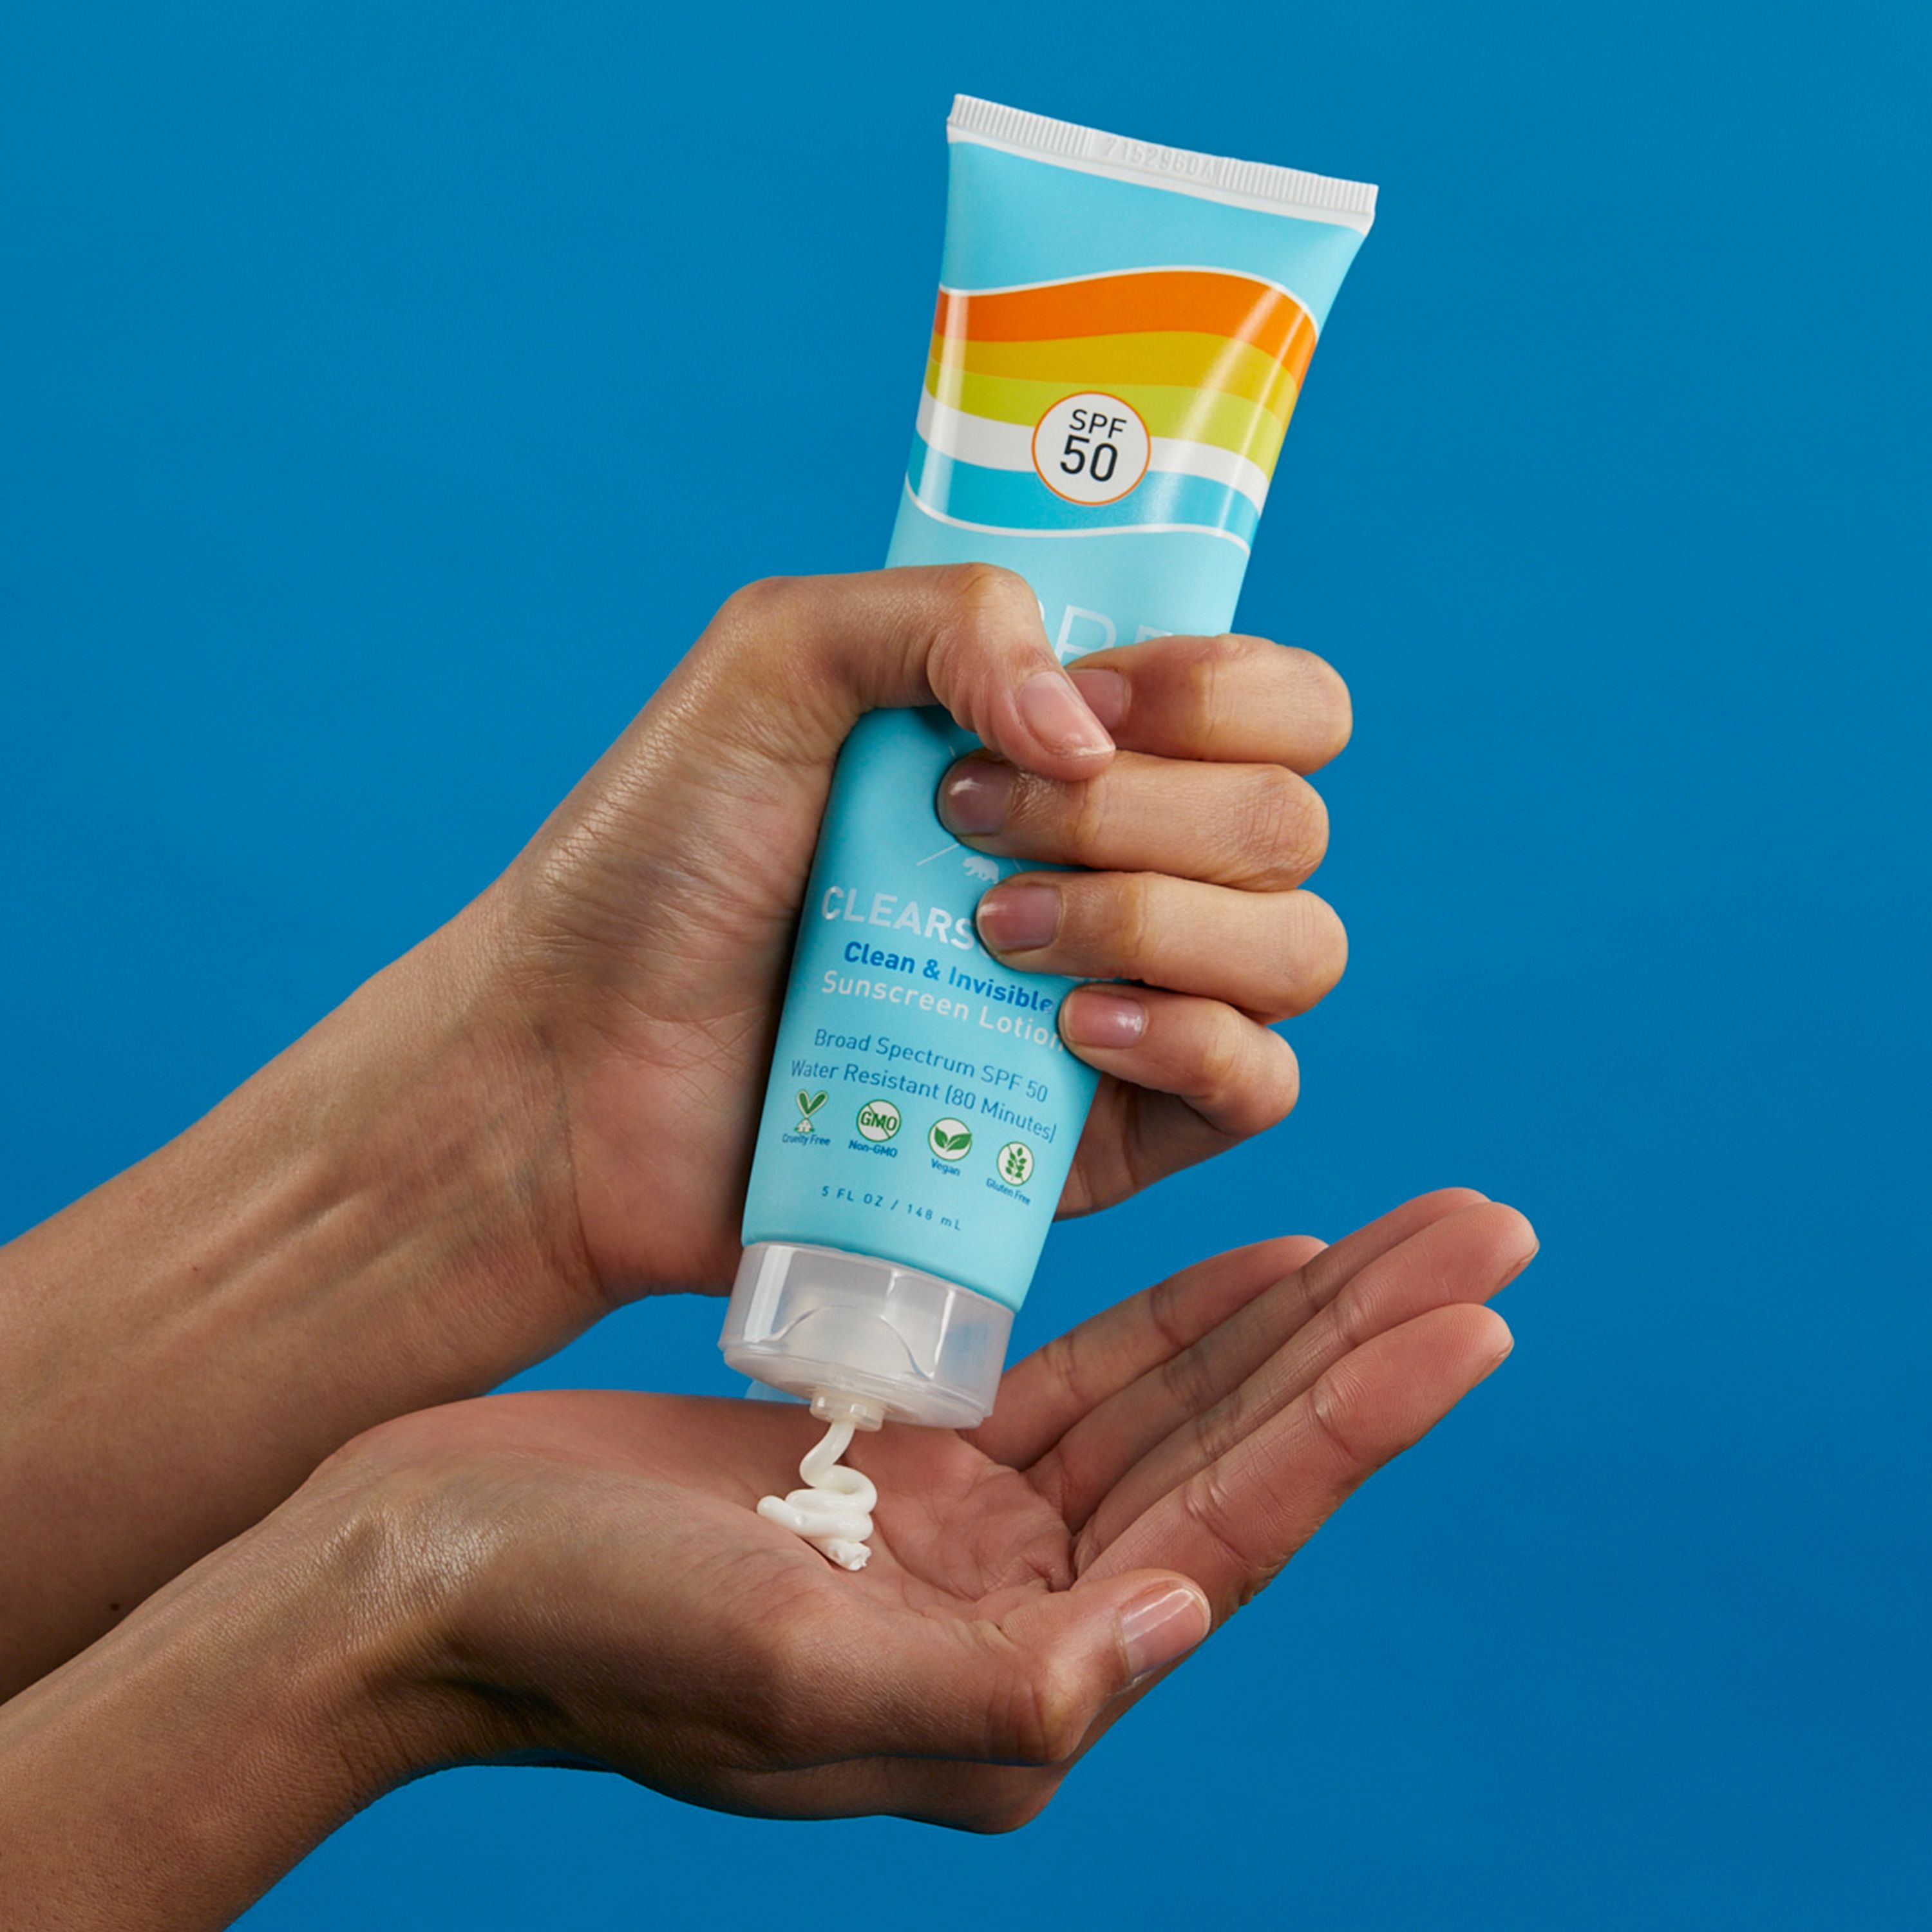 Bare Republic Clearscreen Sunscreen Body Lotion, SPF 50  - 5 fl oz